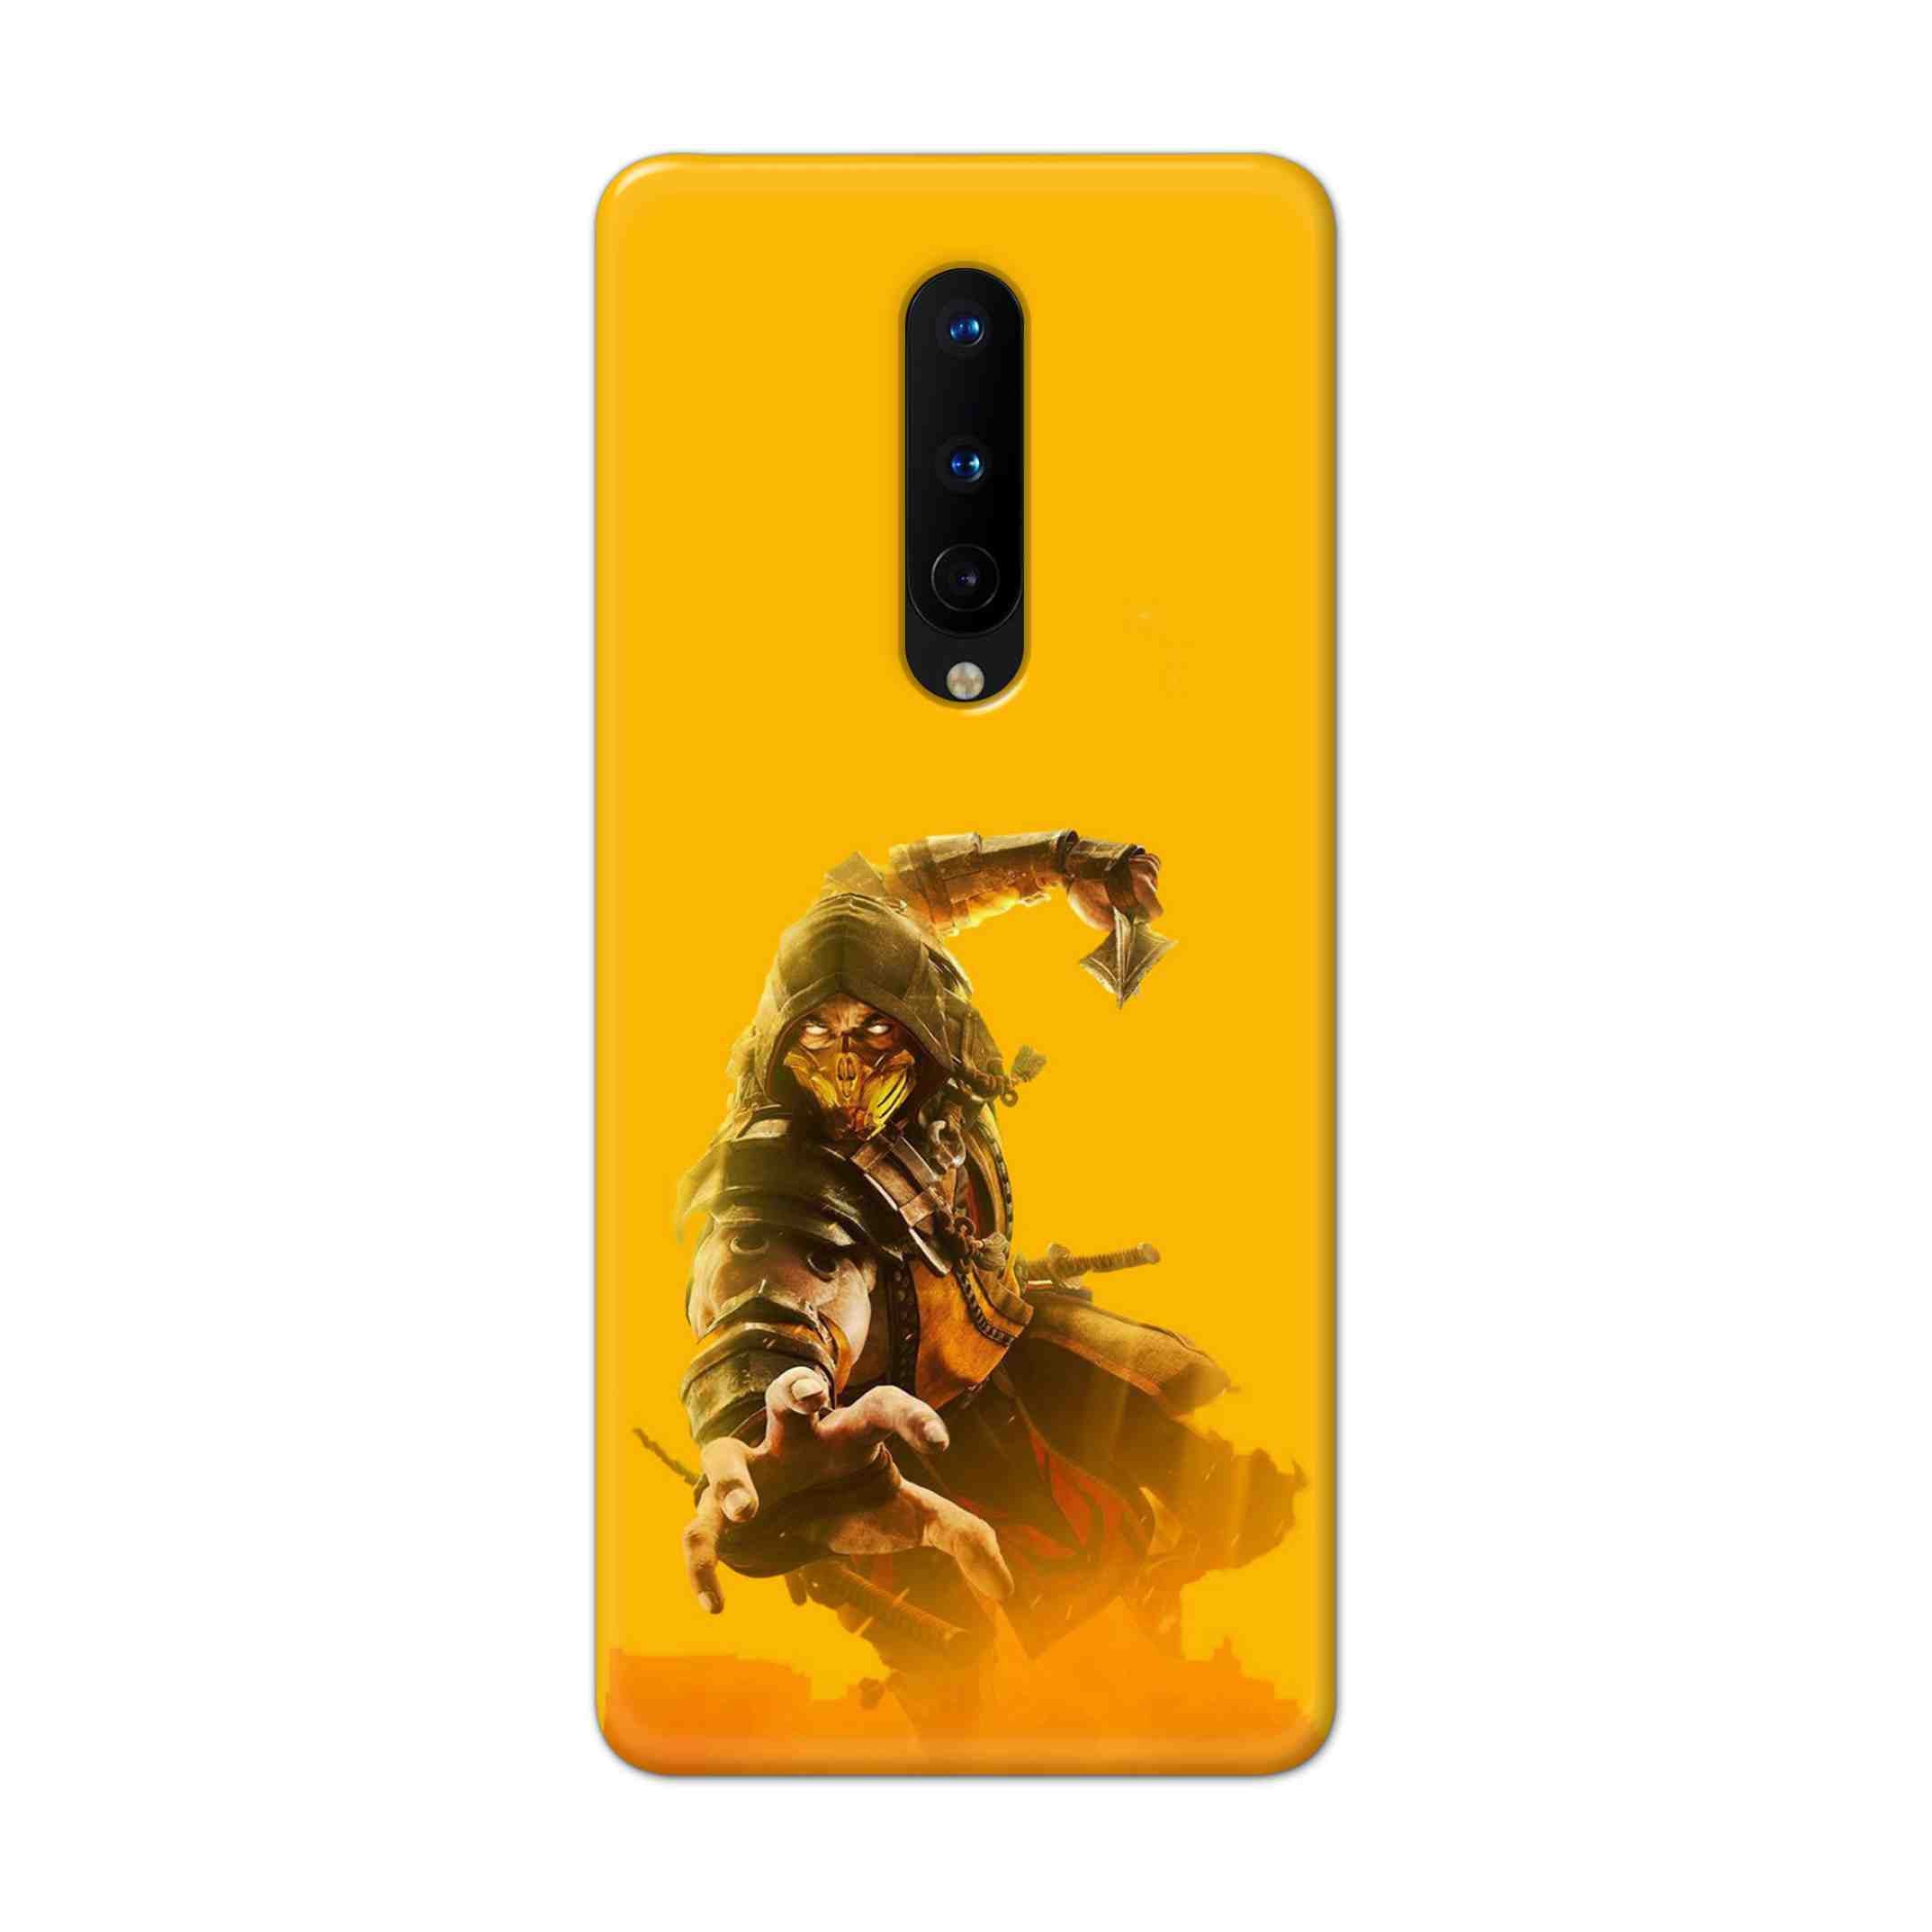 Buy Mortal Kombat Hard Back Mobile Phone Case Cover For OnePlus 8 Online